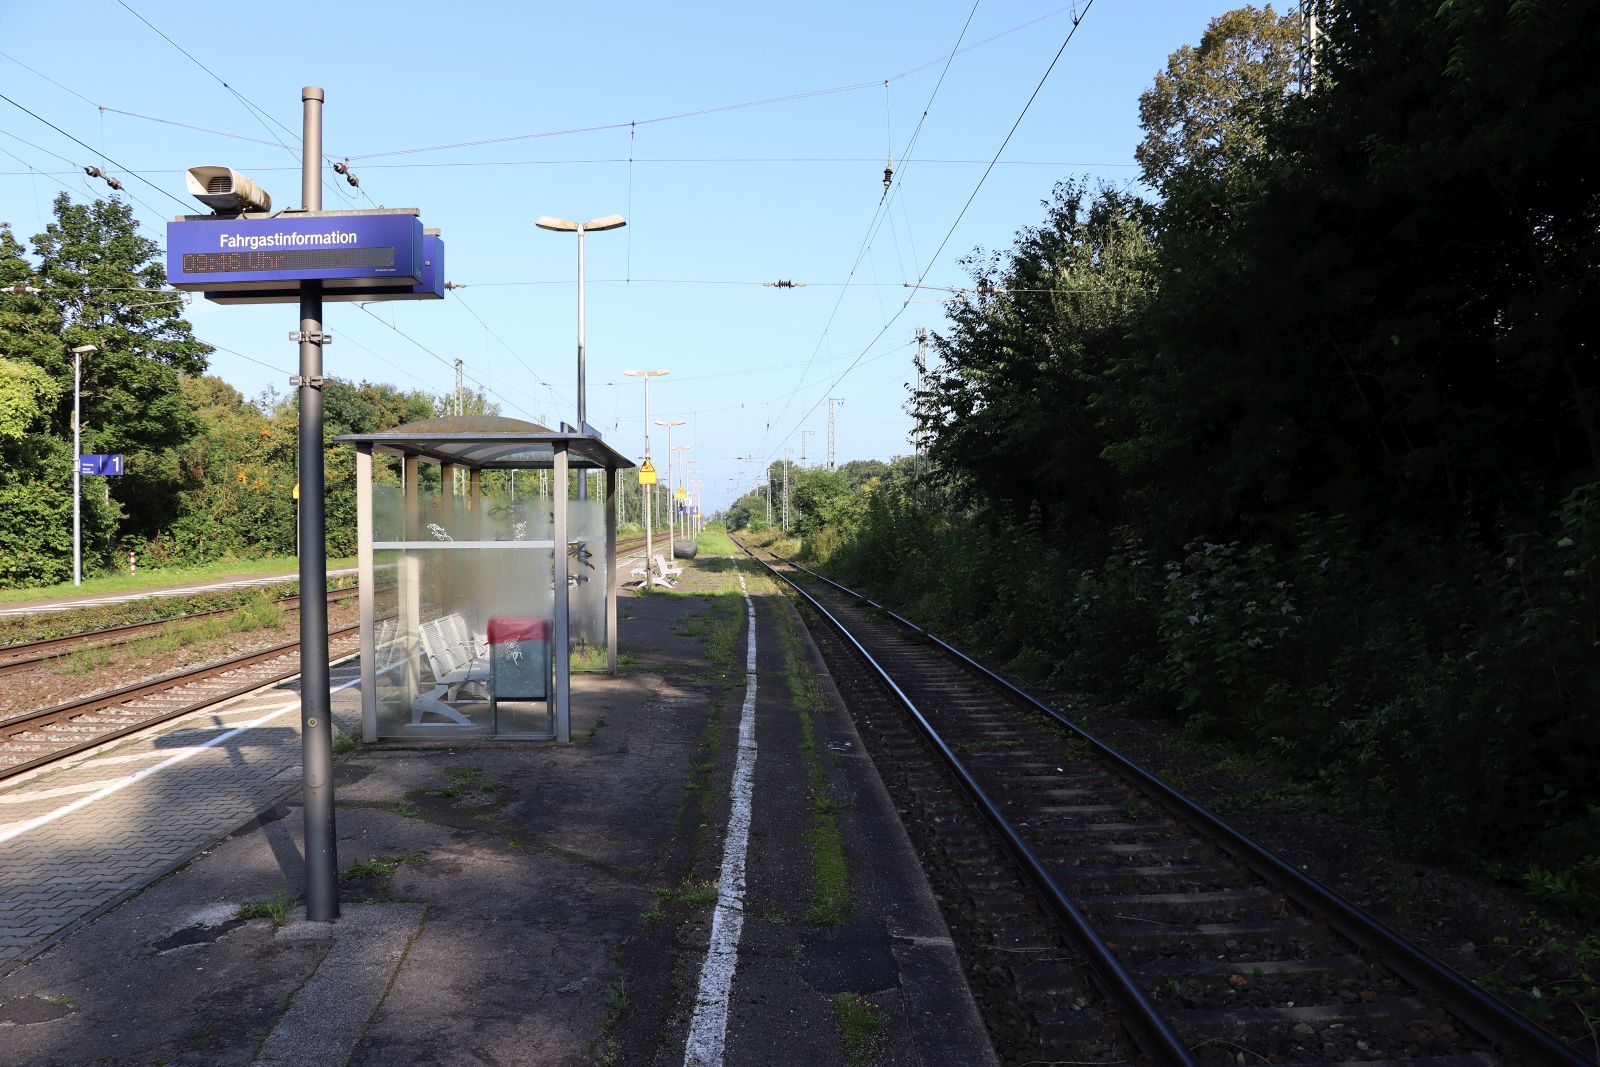 Bahnsteig Gleis 2 und 4 Bahnhof Empel-Rees 02-09-2021.

Perron spoor 2 en 4 station Empel-Rees 02-09-2021.